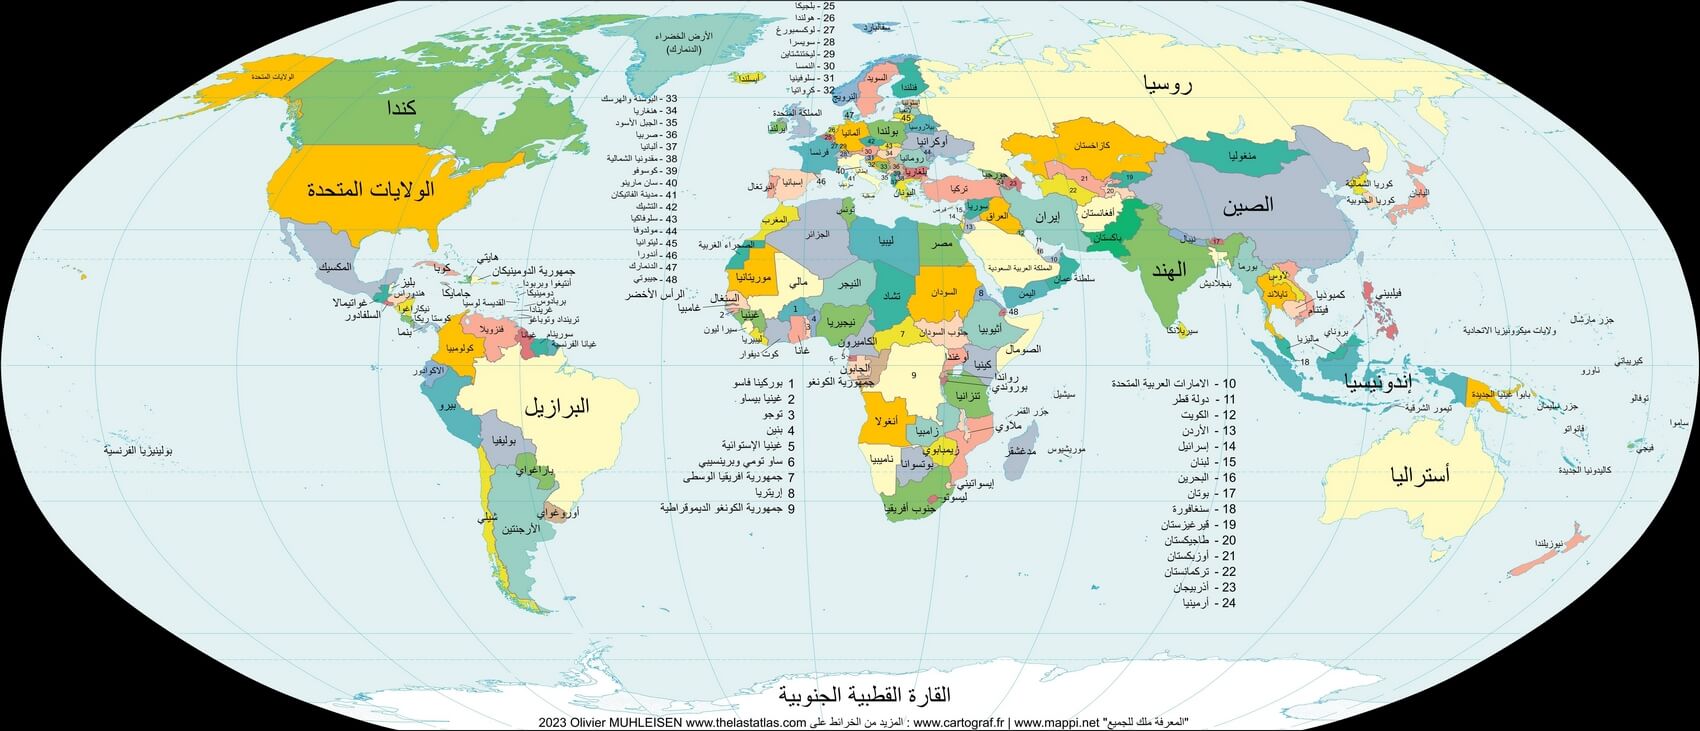 Mapa mundi com países em árabe